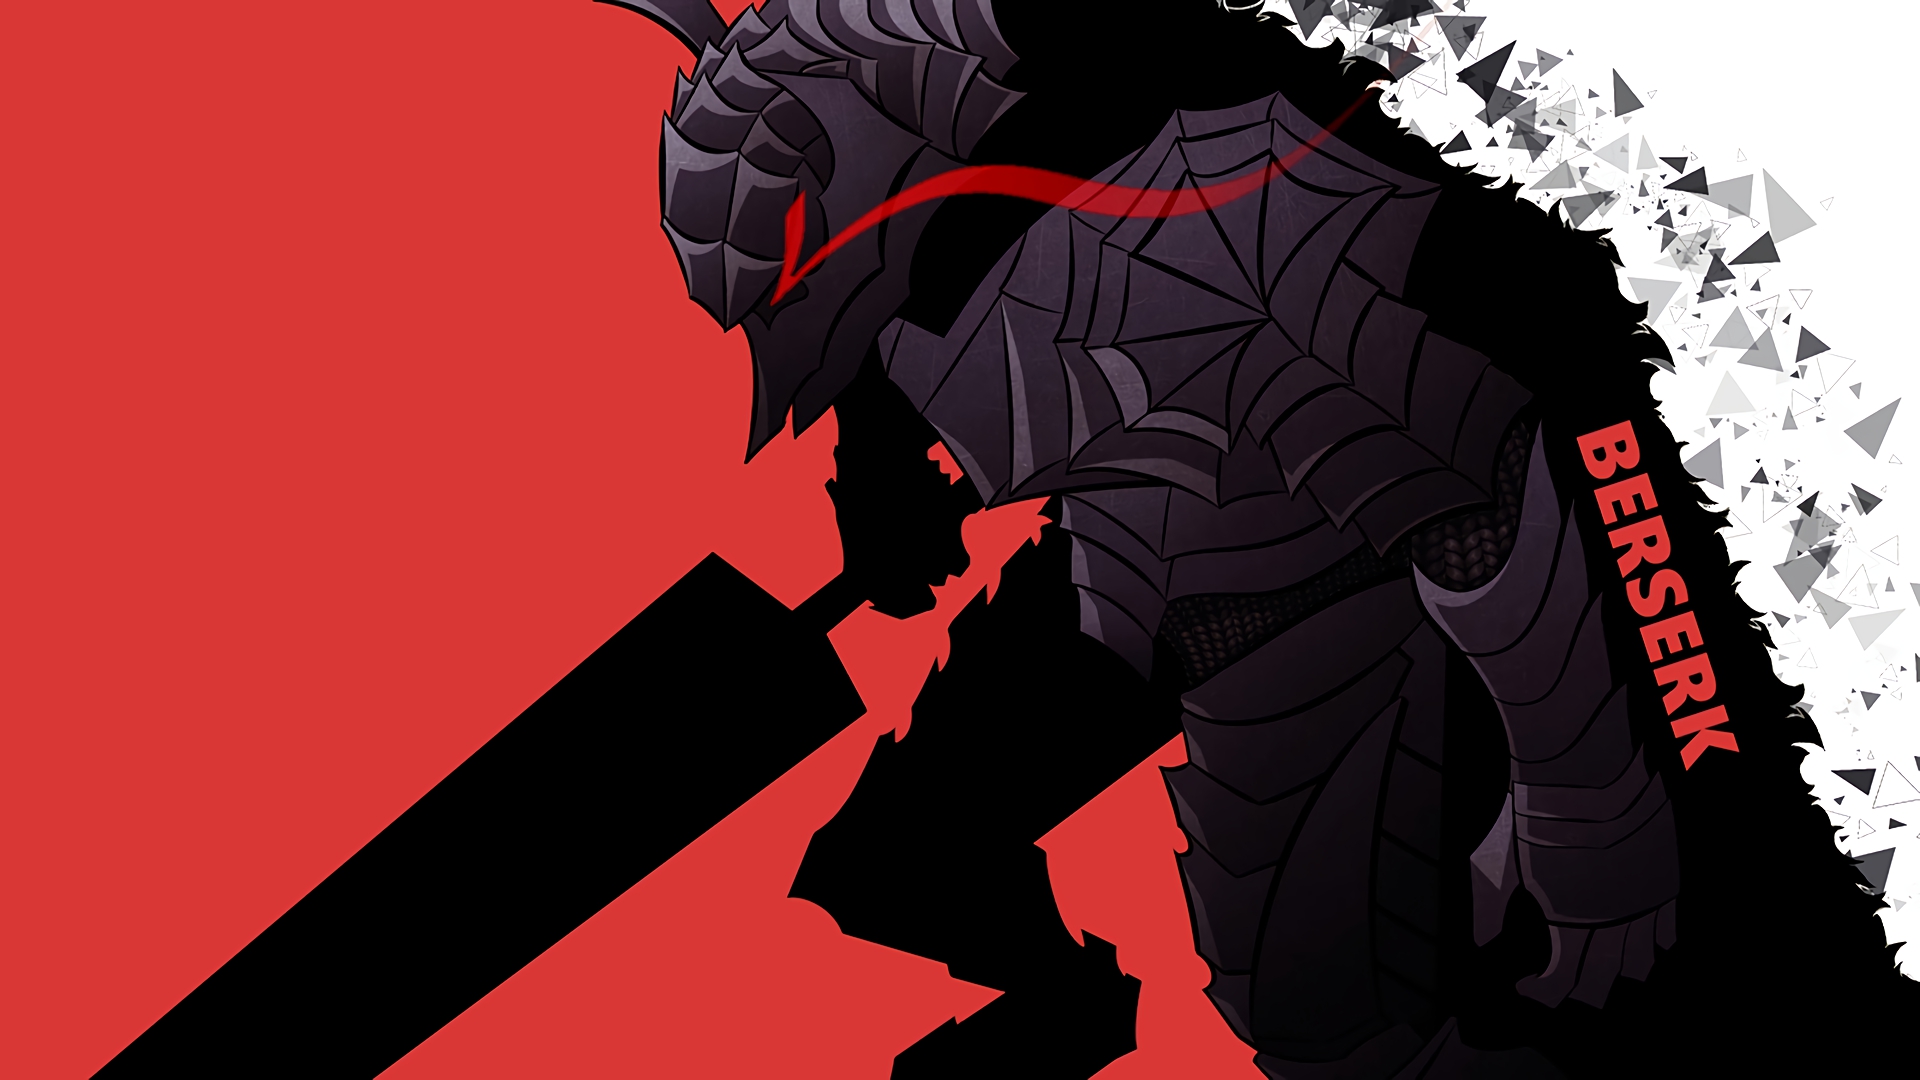 Berserk Armor wallpaper by NellaFLegnA  Download on ZEDGE  582f